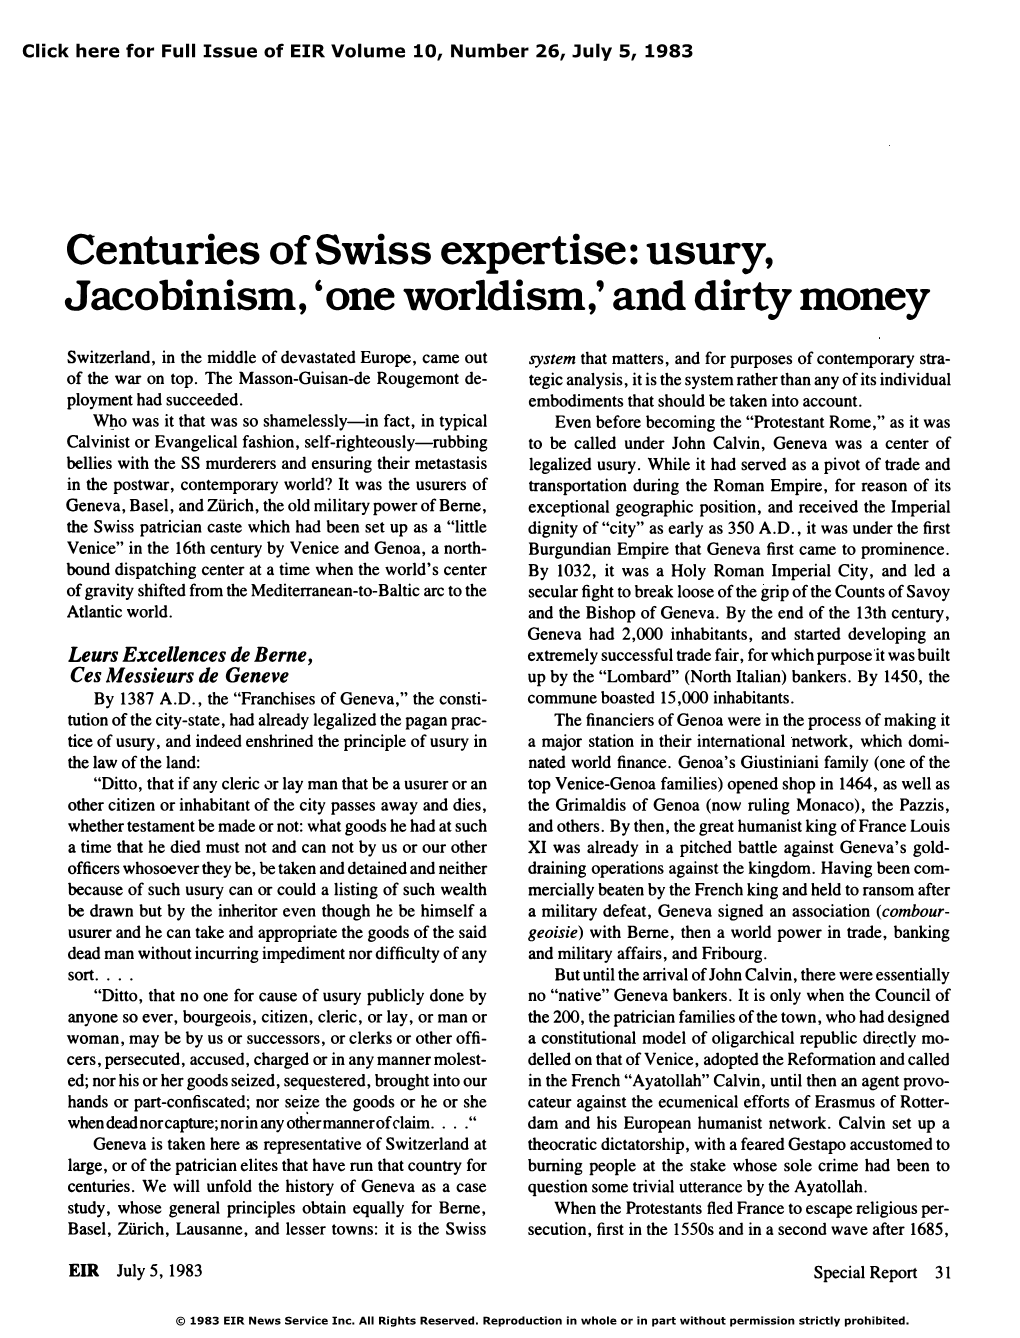 Centuries of Swiss Expertise: Usury, Jacobinism, 'One Worldism,' and Dirtymoney